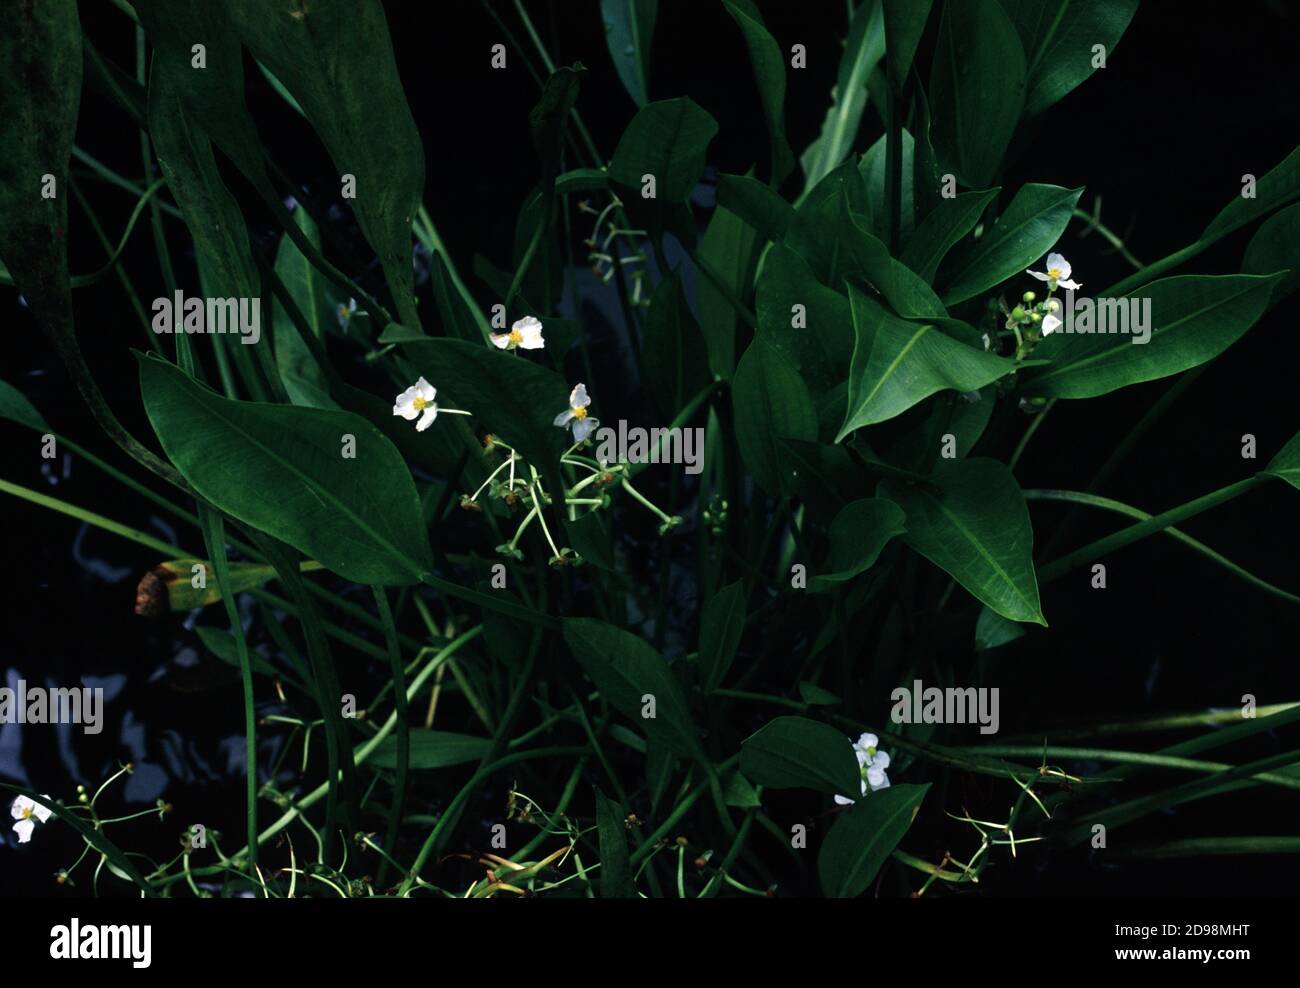 Amazon sword (Echinodorus macrophyllus) with flowers Stock Photo